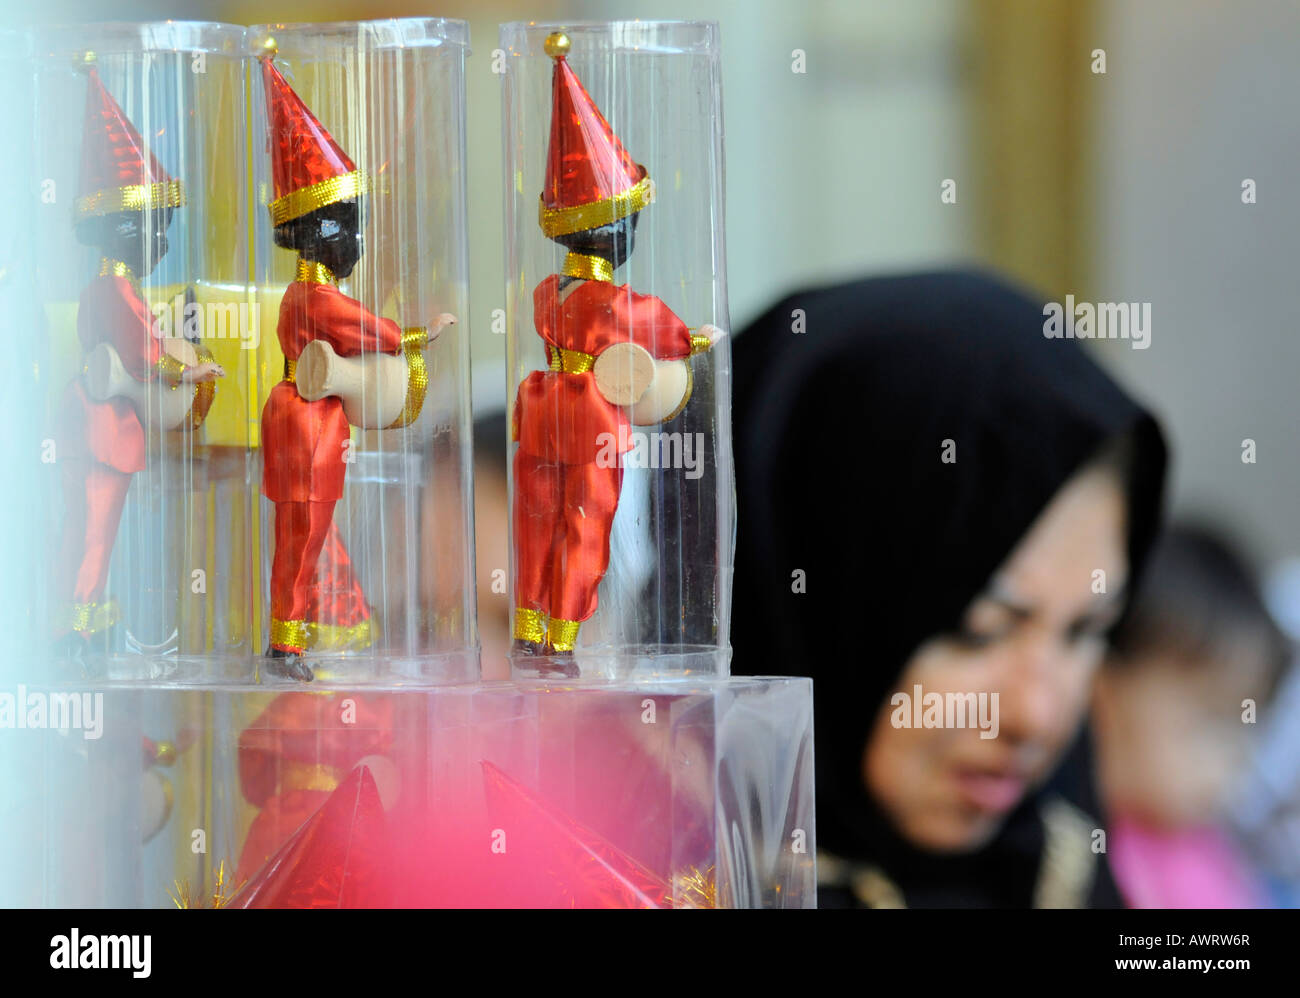 Small figurine of 'Haji Firouz', a popular gift during the Iranian new year celebration. Photo taken in Tehran, Iran Stock Photo